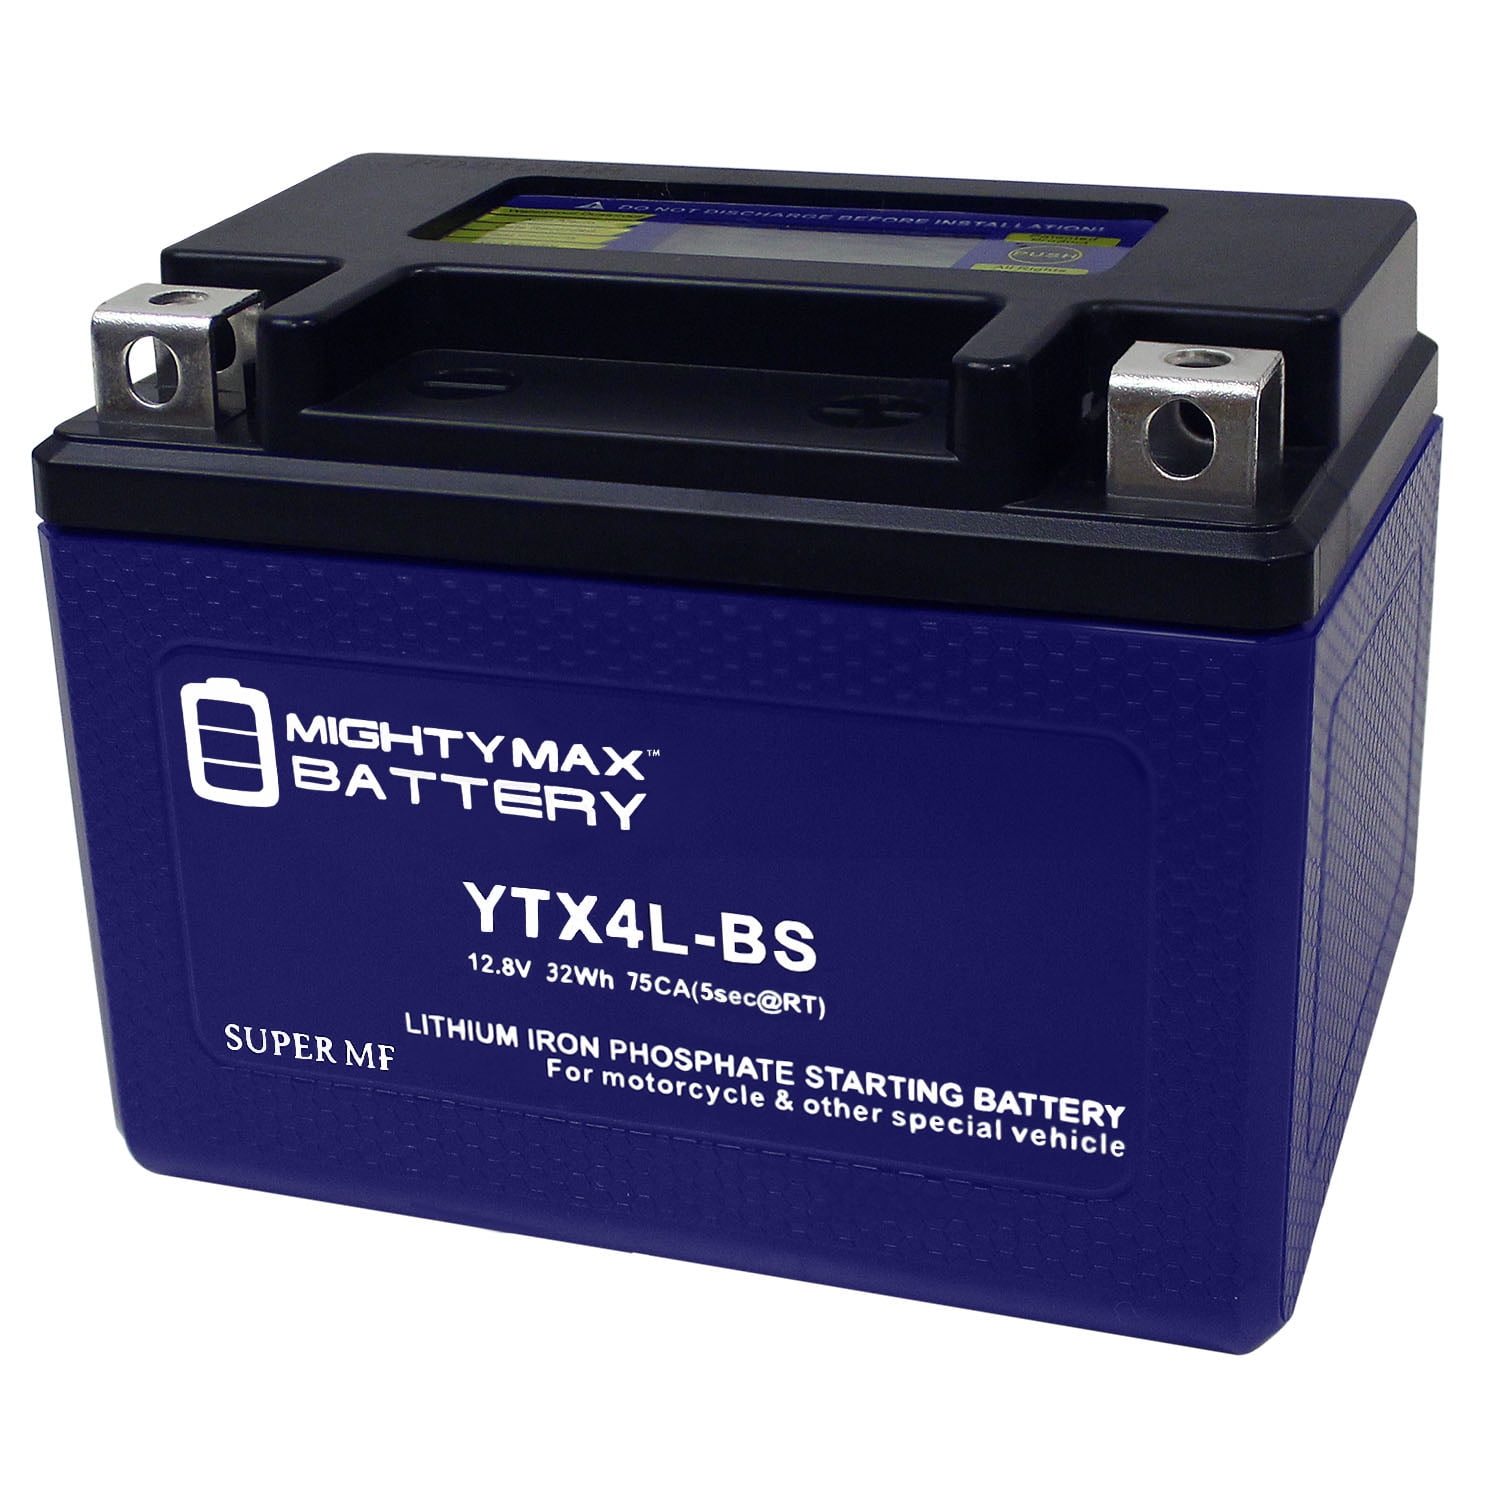 ULTRAMAX TTX4L-BS AS YTX4 GILERA 125 SC 2006-2007 Motorcycle/Motorbike Battery